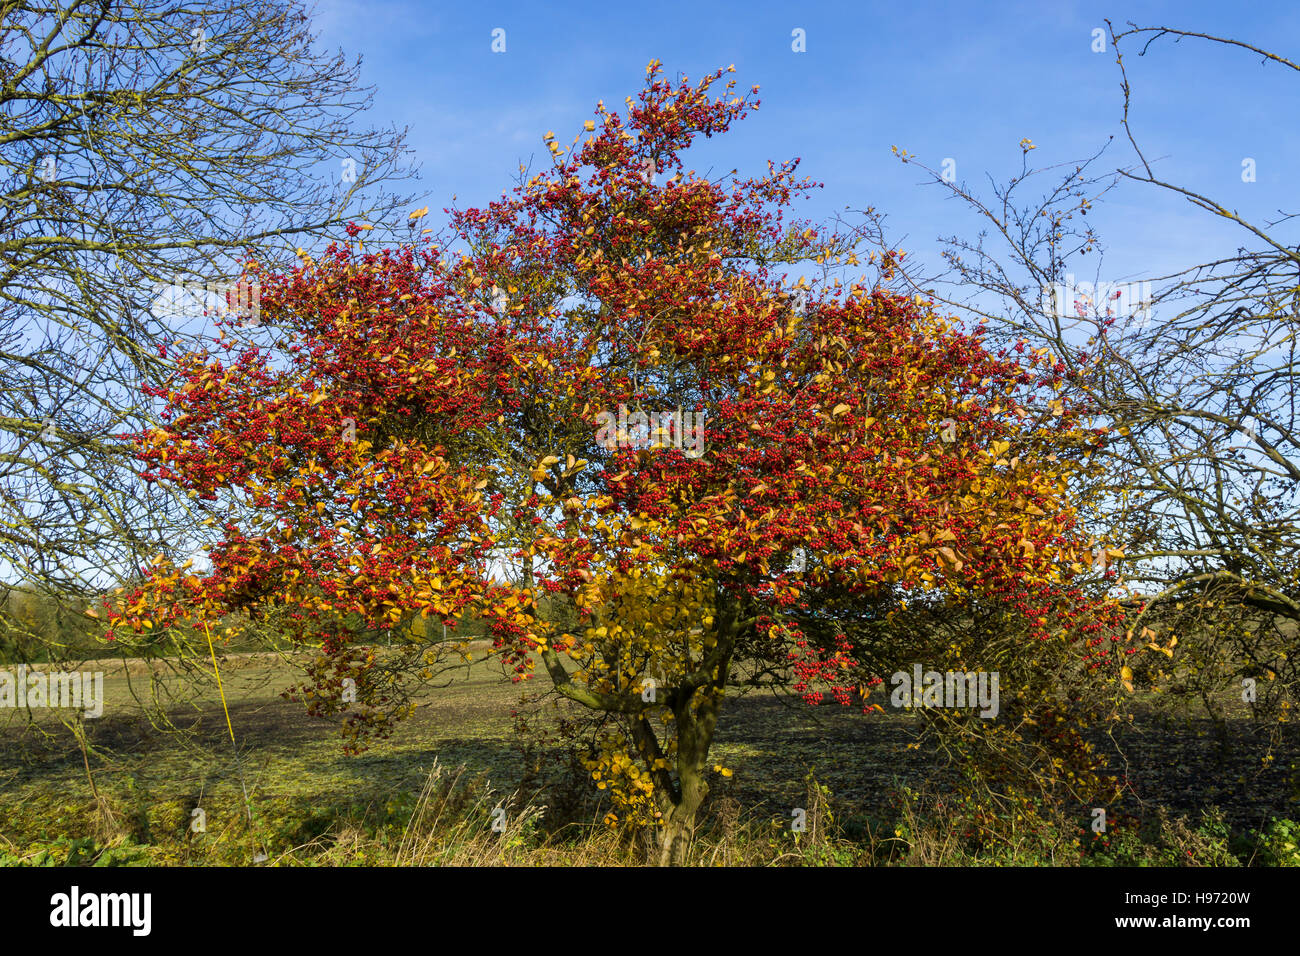 Cockspur thorn 'Crataegus crus-galli' in autumn foliage with berries Milton Cambridge Cambridgeshire England UK 2016 Stock Photo